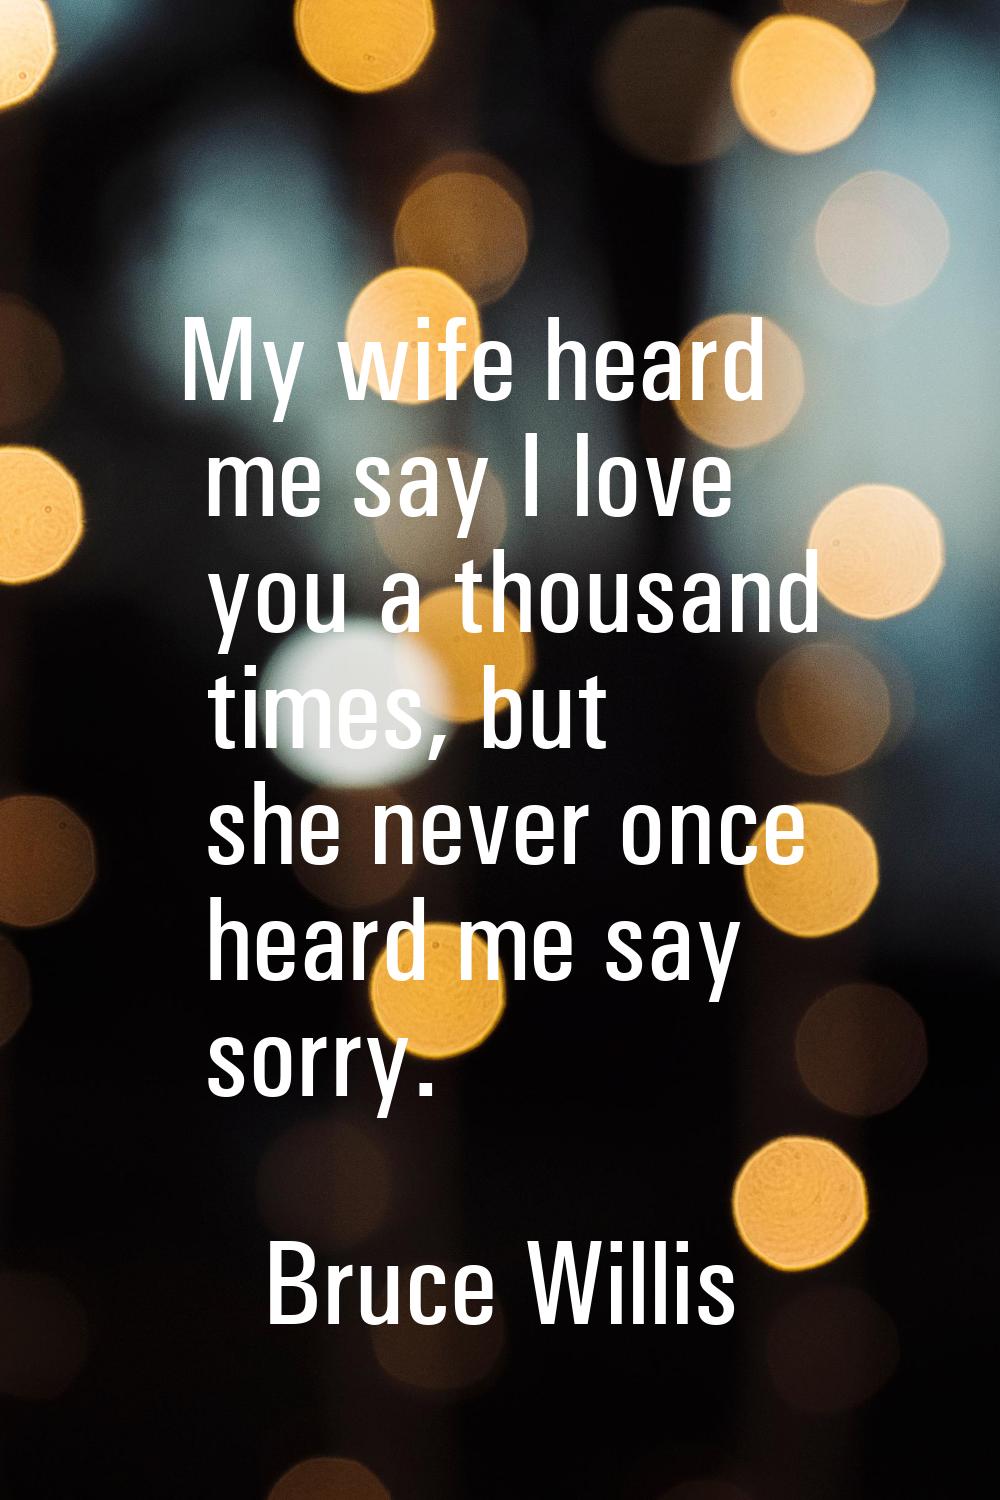 My wife heard me say I love you a thousand times, but she never once heard me say sorry.